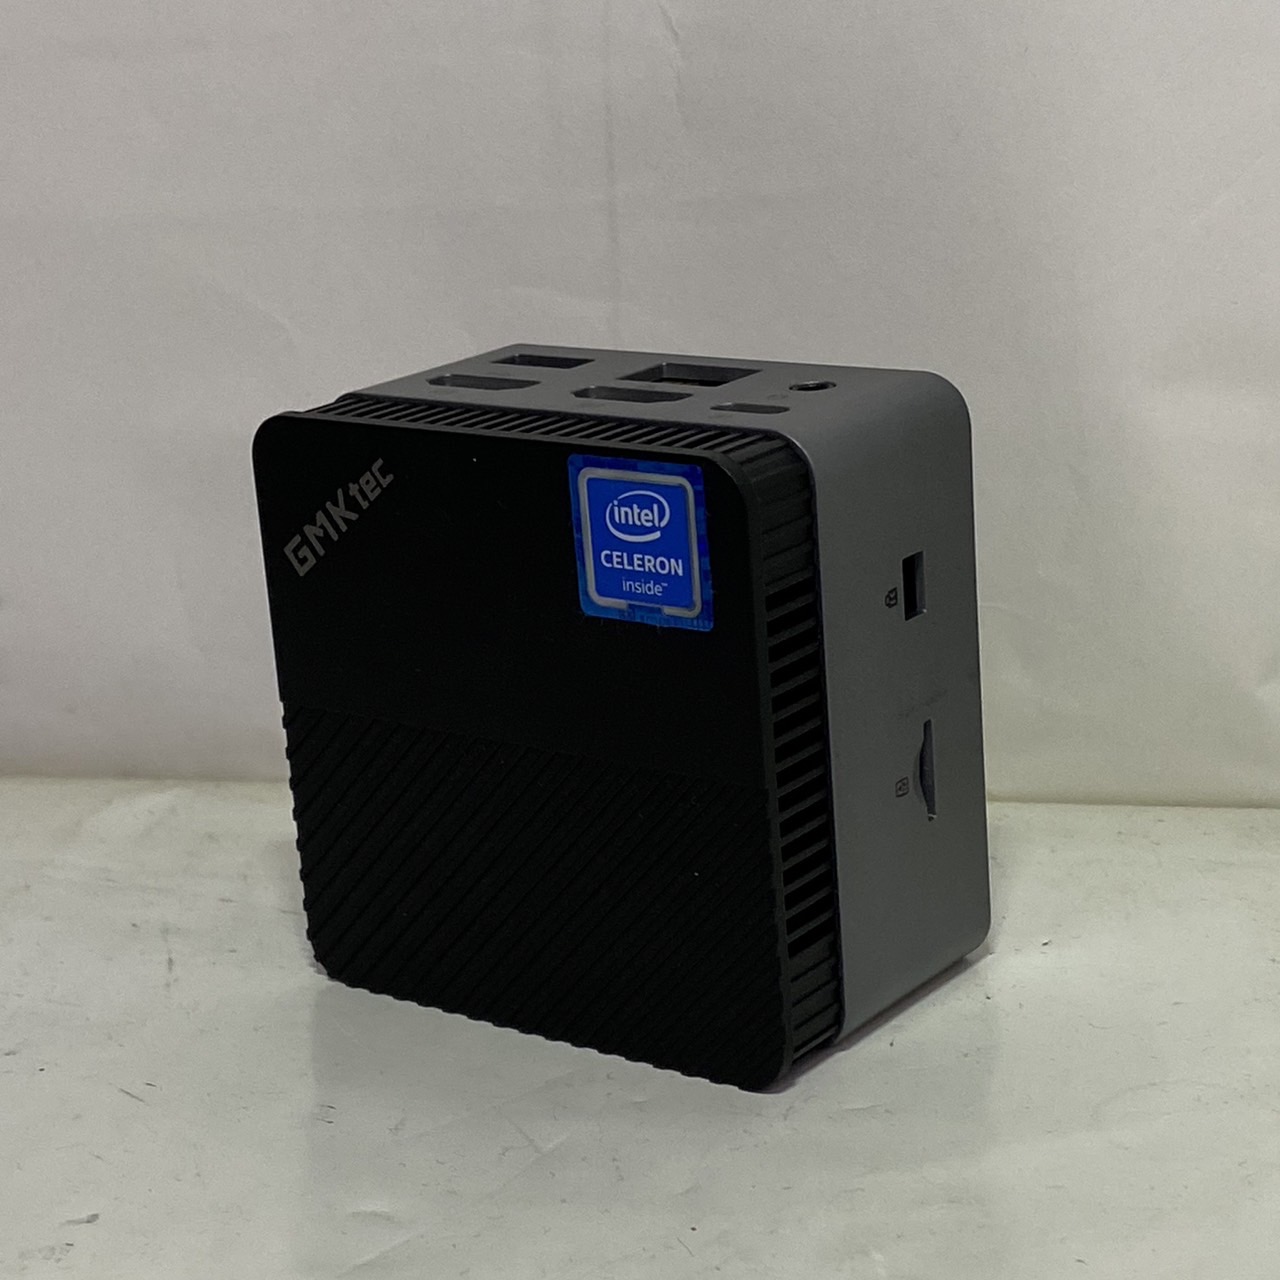 GMKtec NucBox5 N5105 Mini PC reviewed by ETA PRIME 